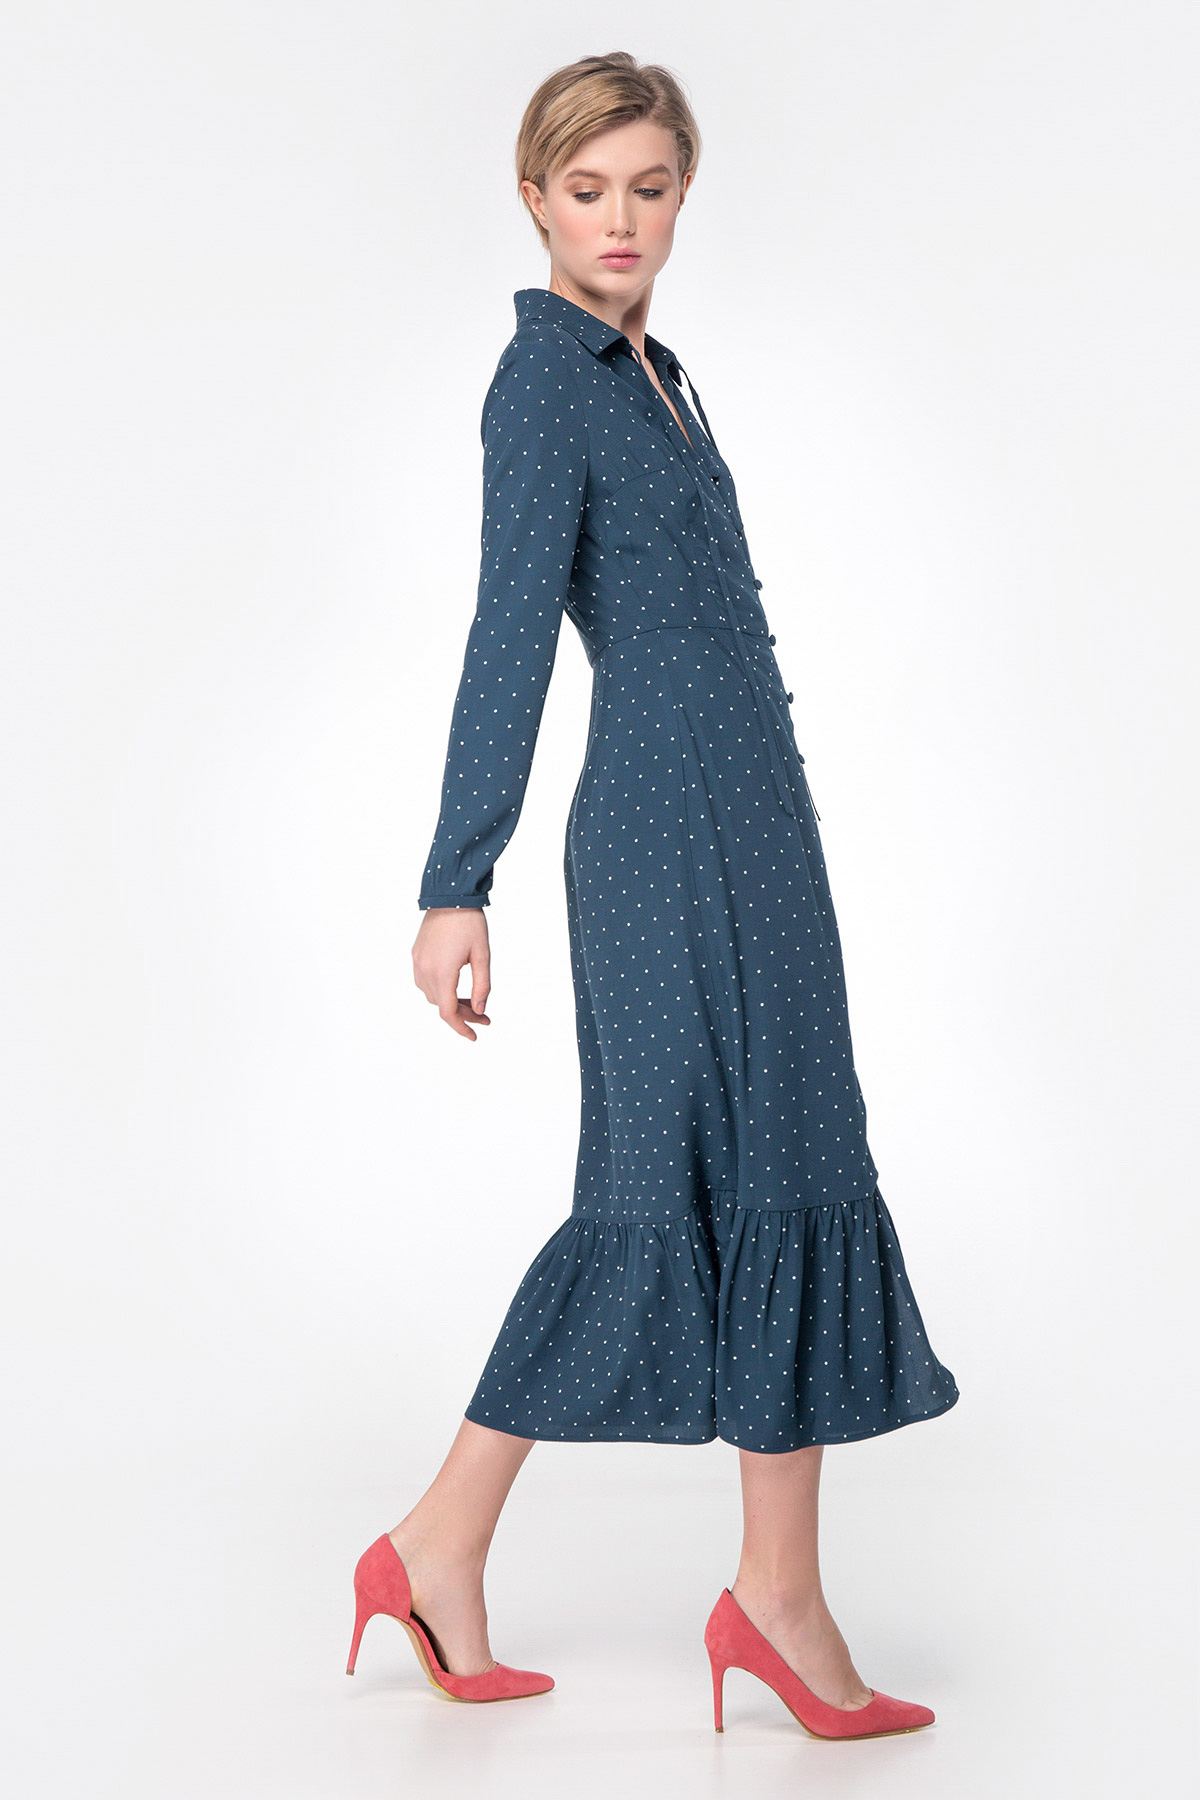 Dark-blue polka dot dress with pleats, photo 6